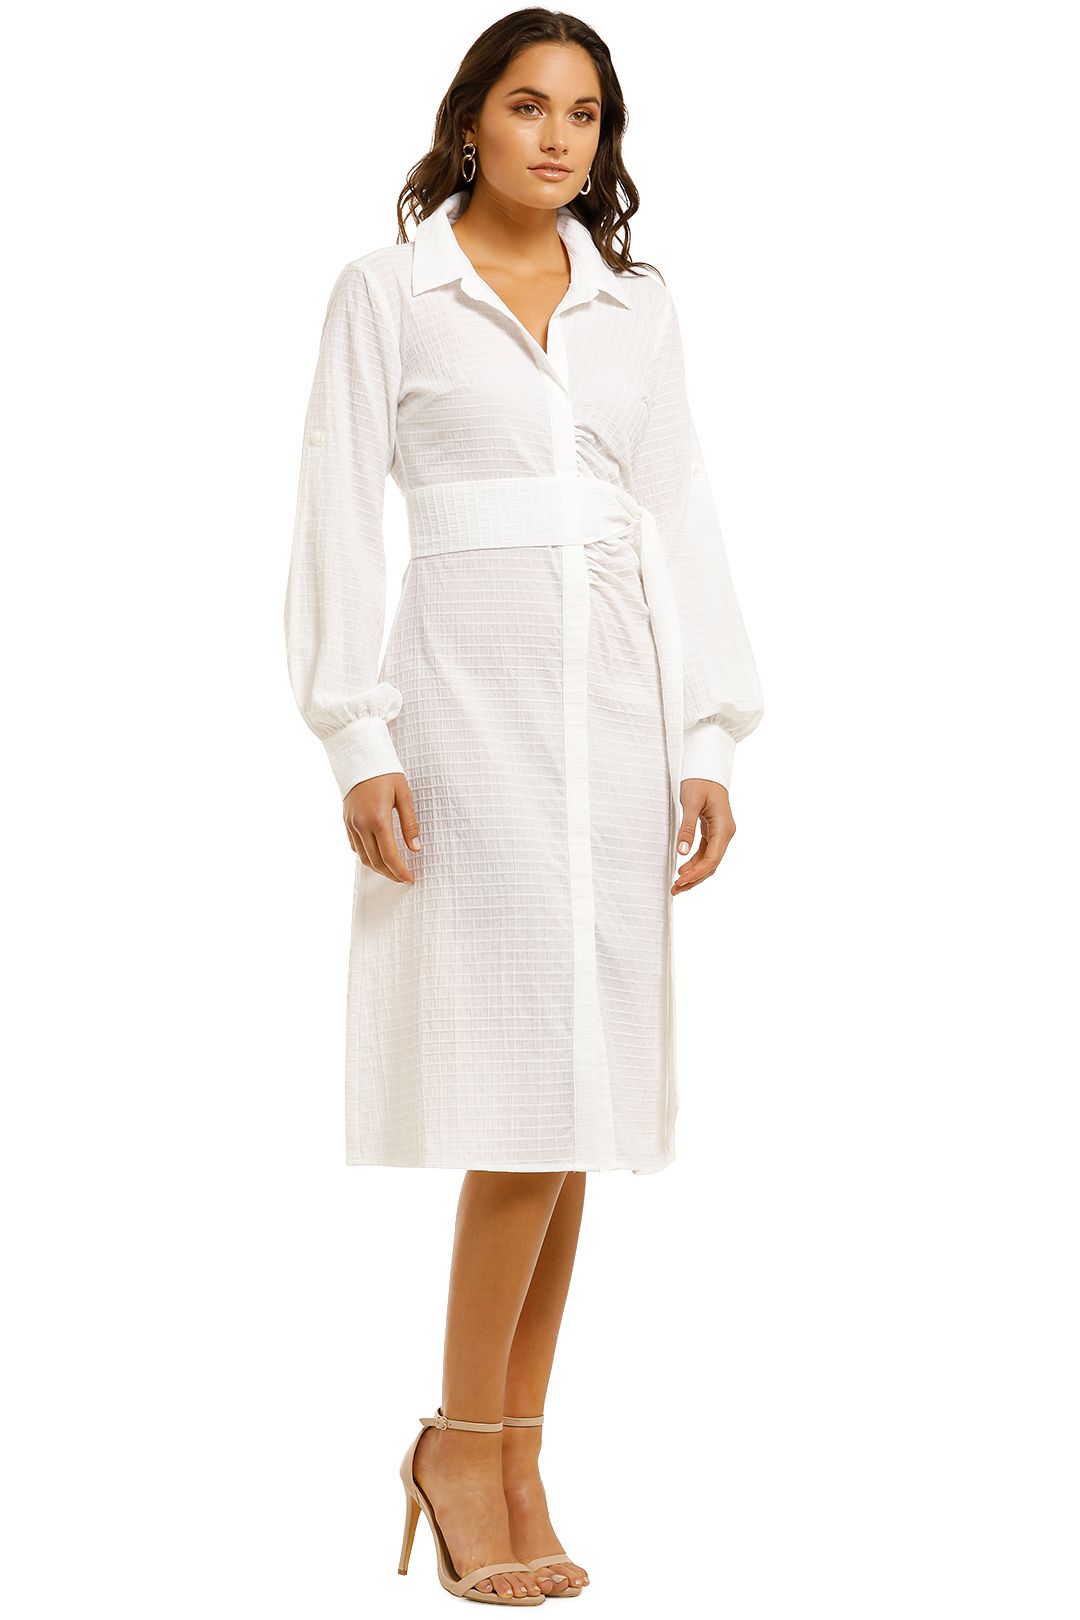 Elliatt-Payton-Dress-White-Side